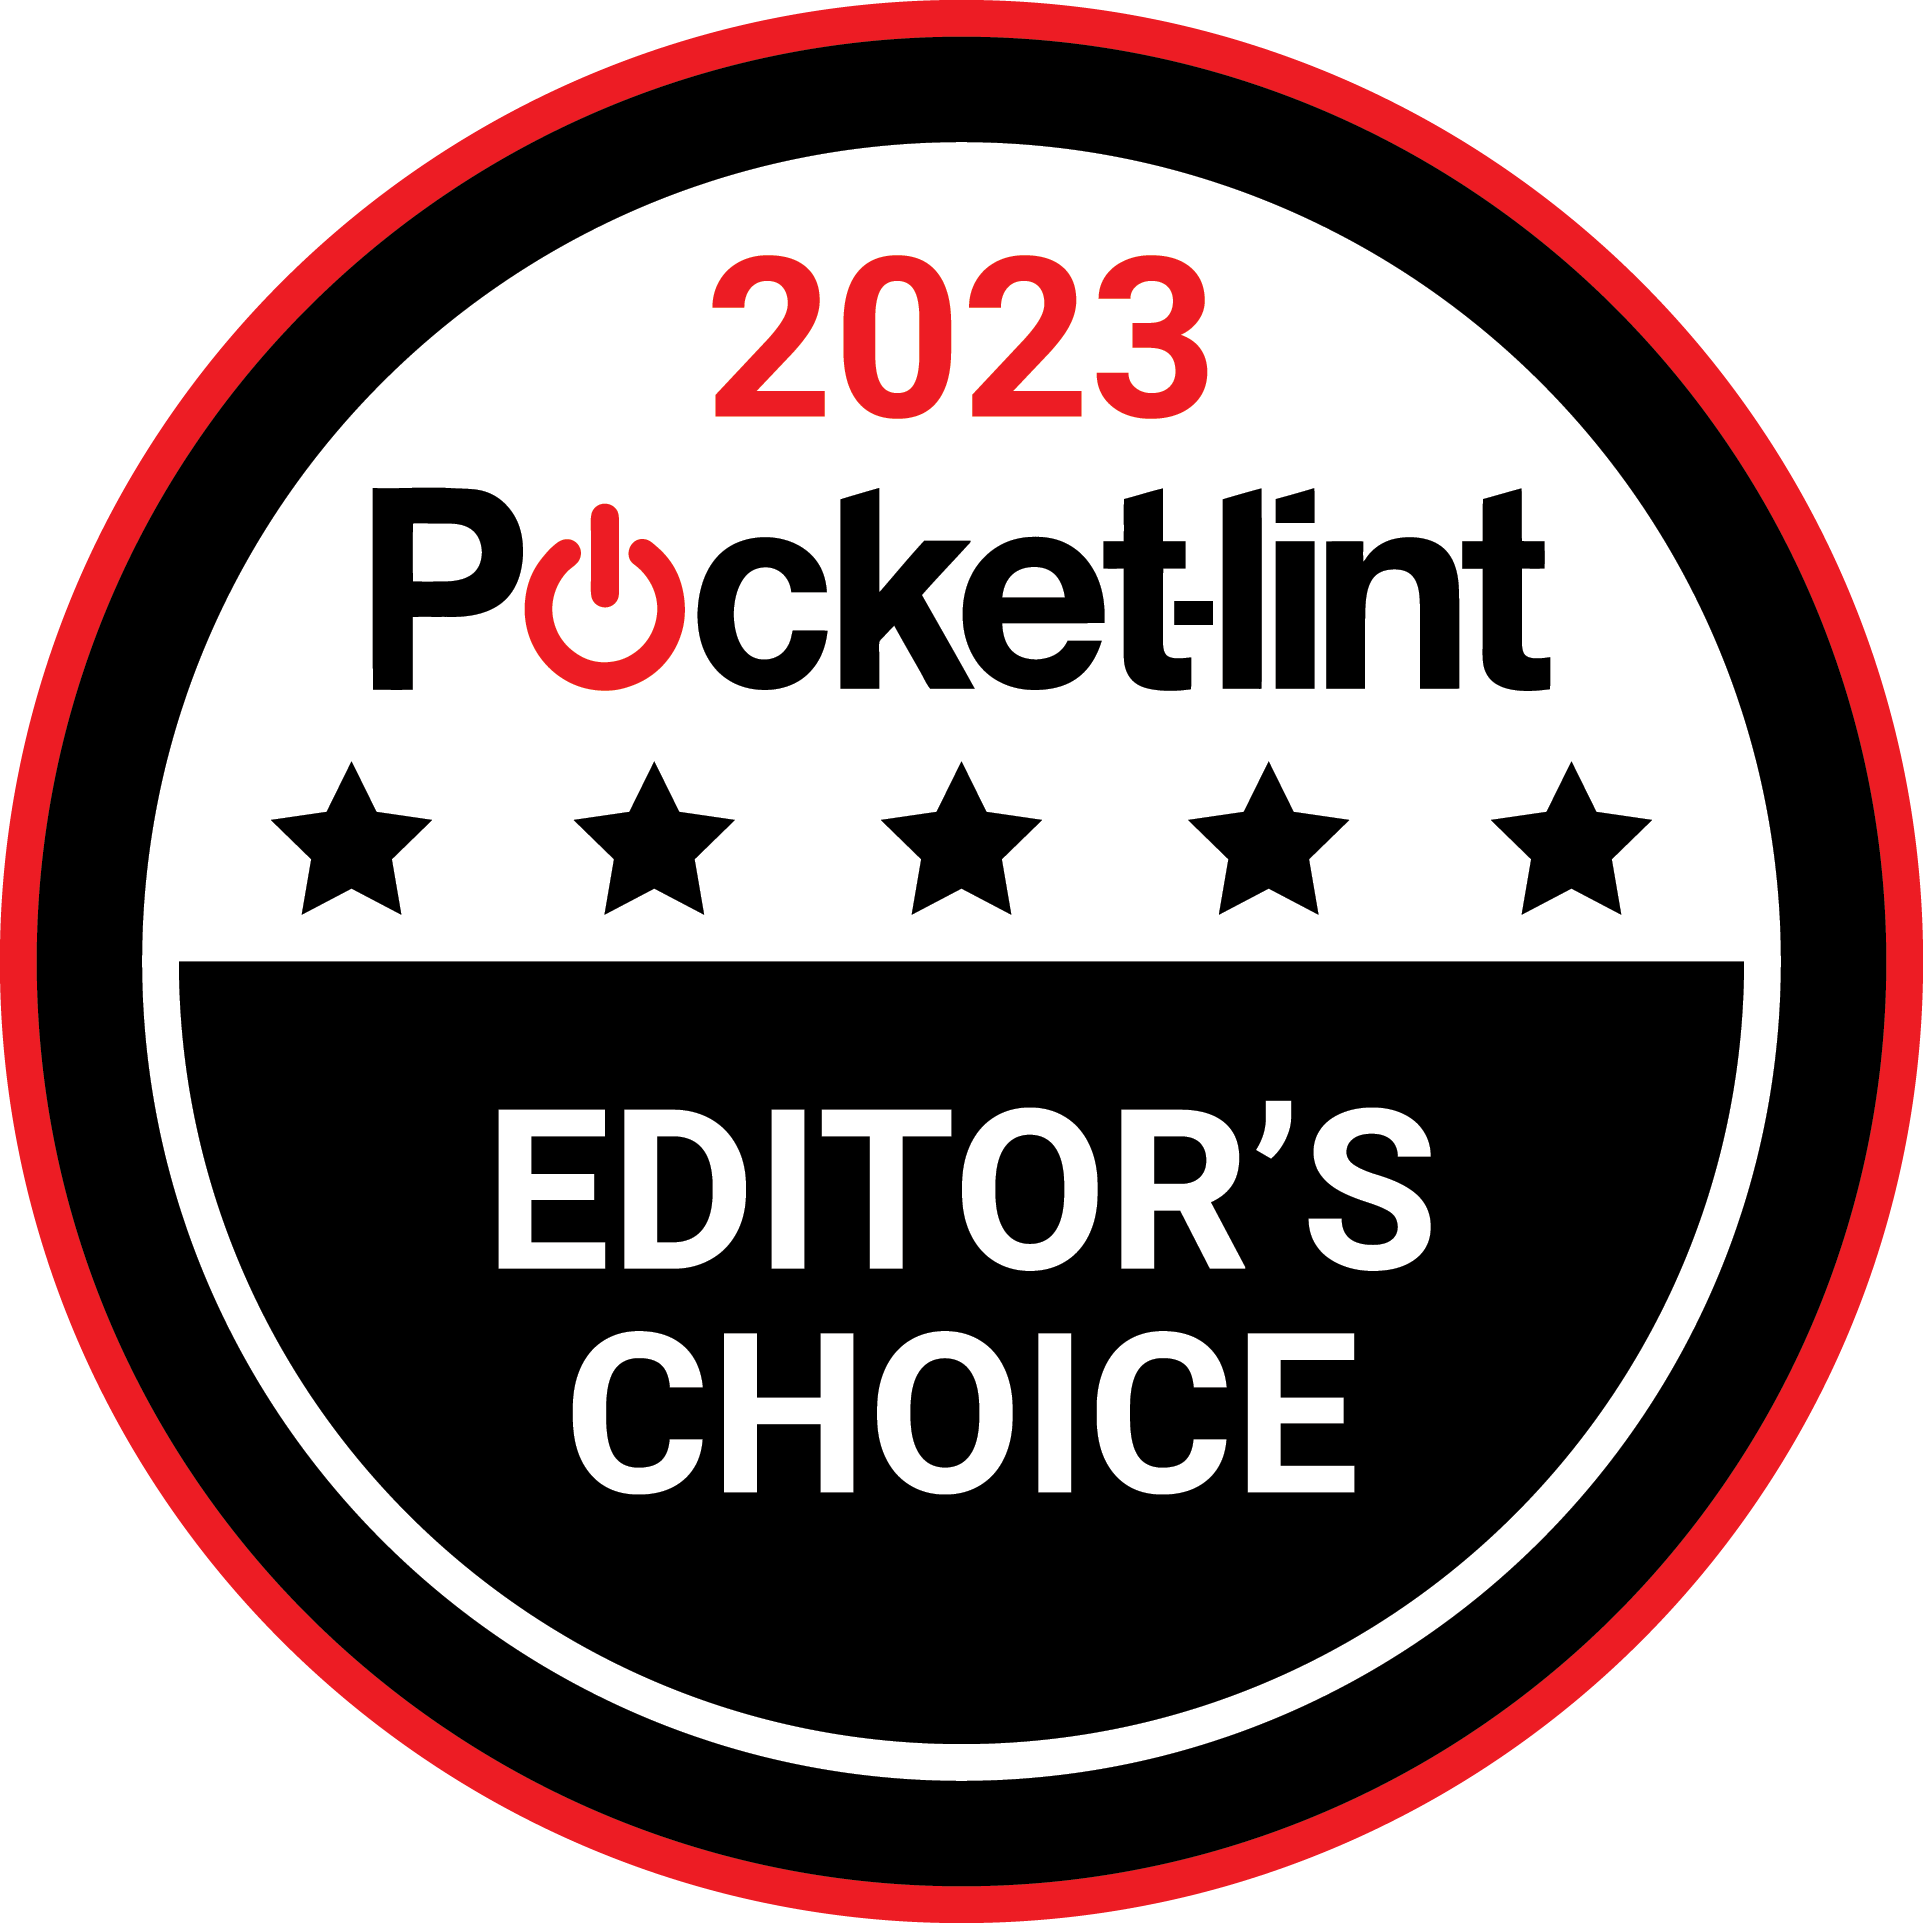 pocket lint editors choice 2023